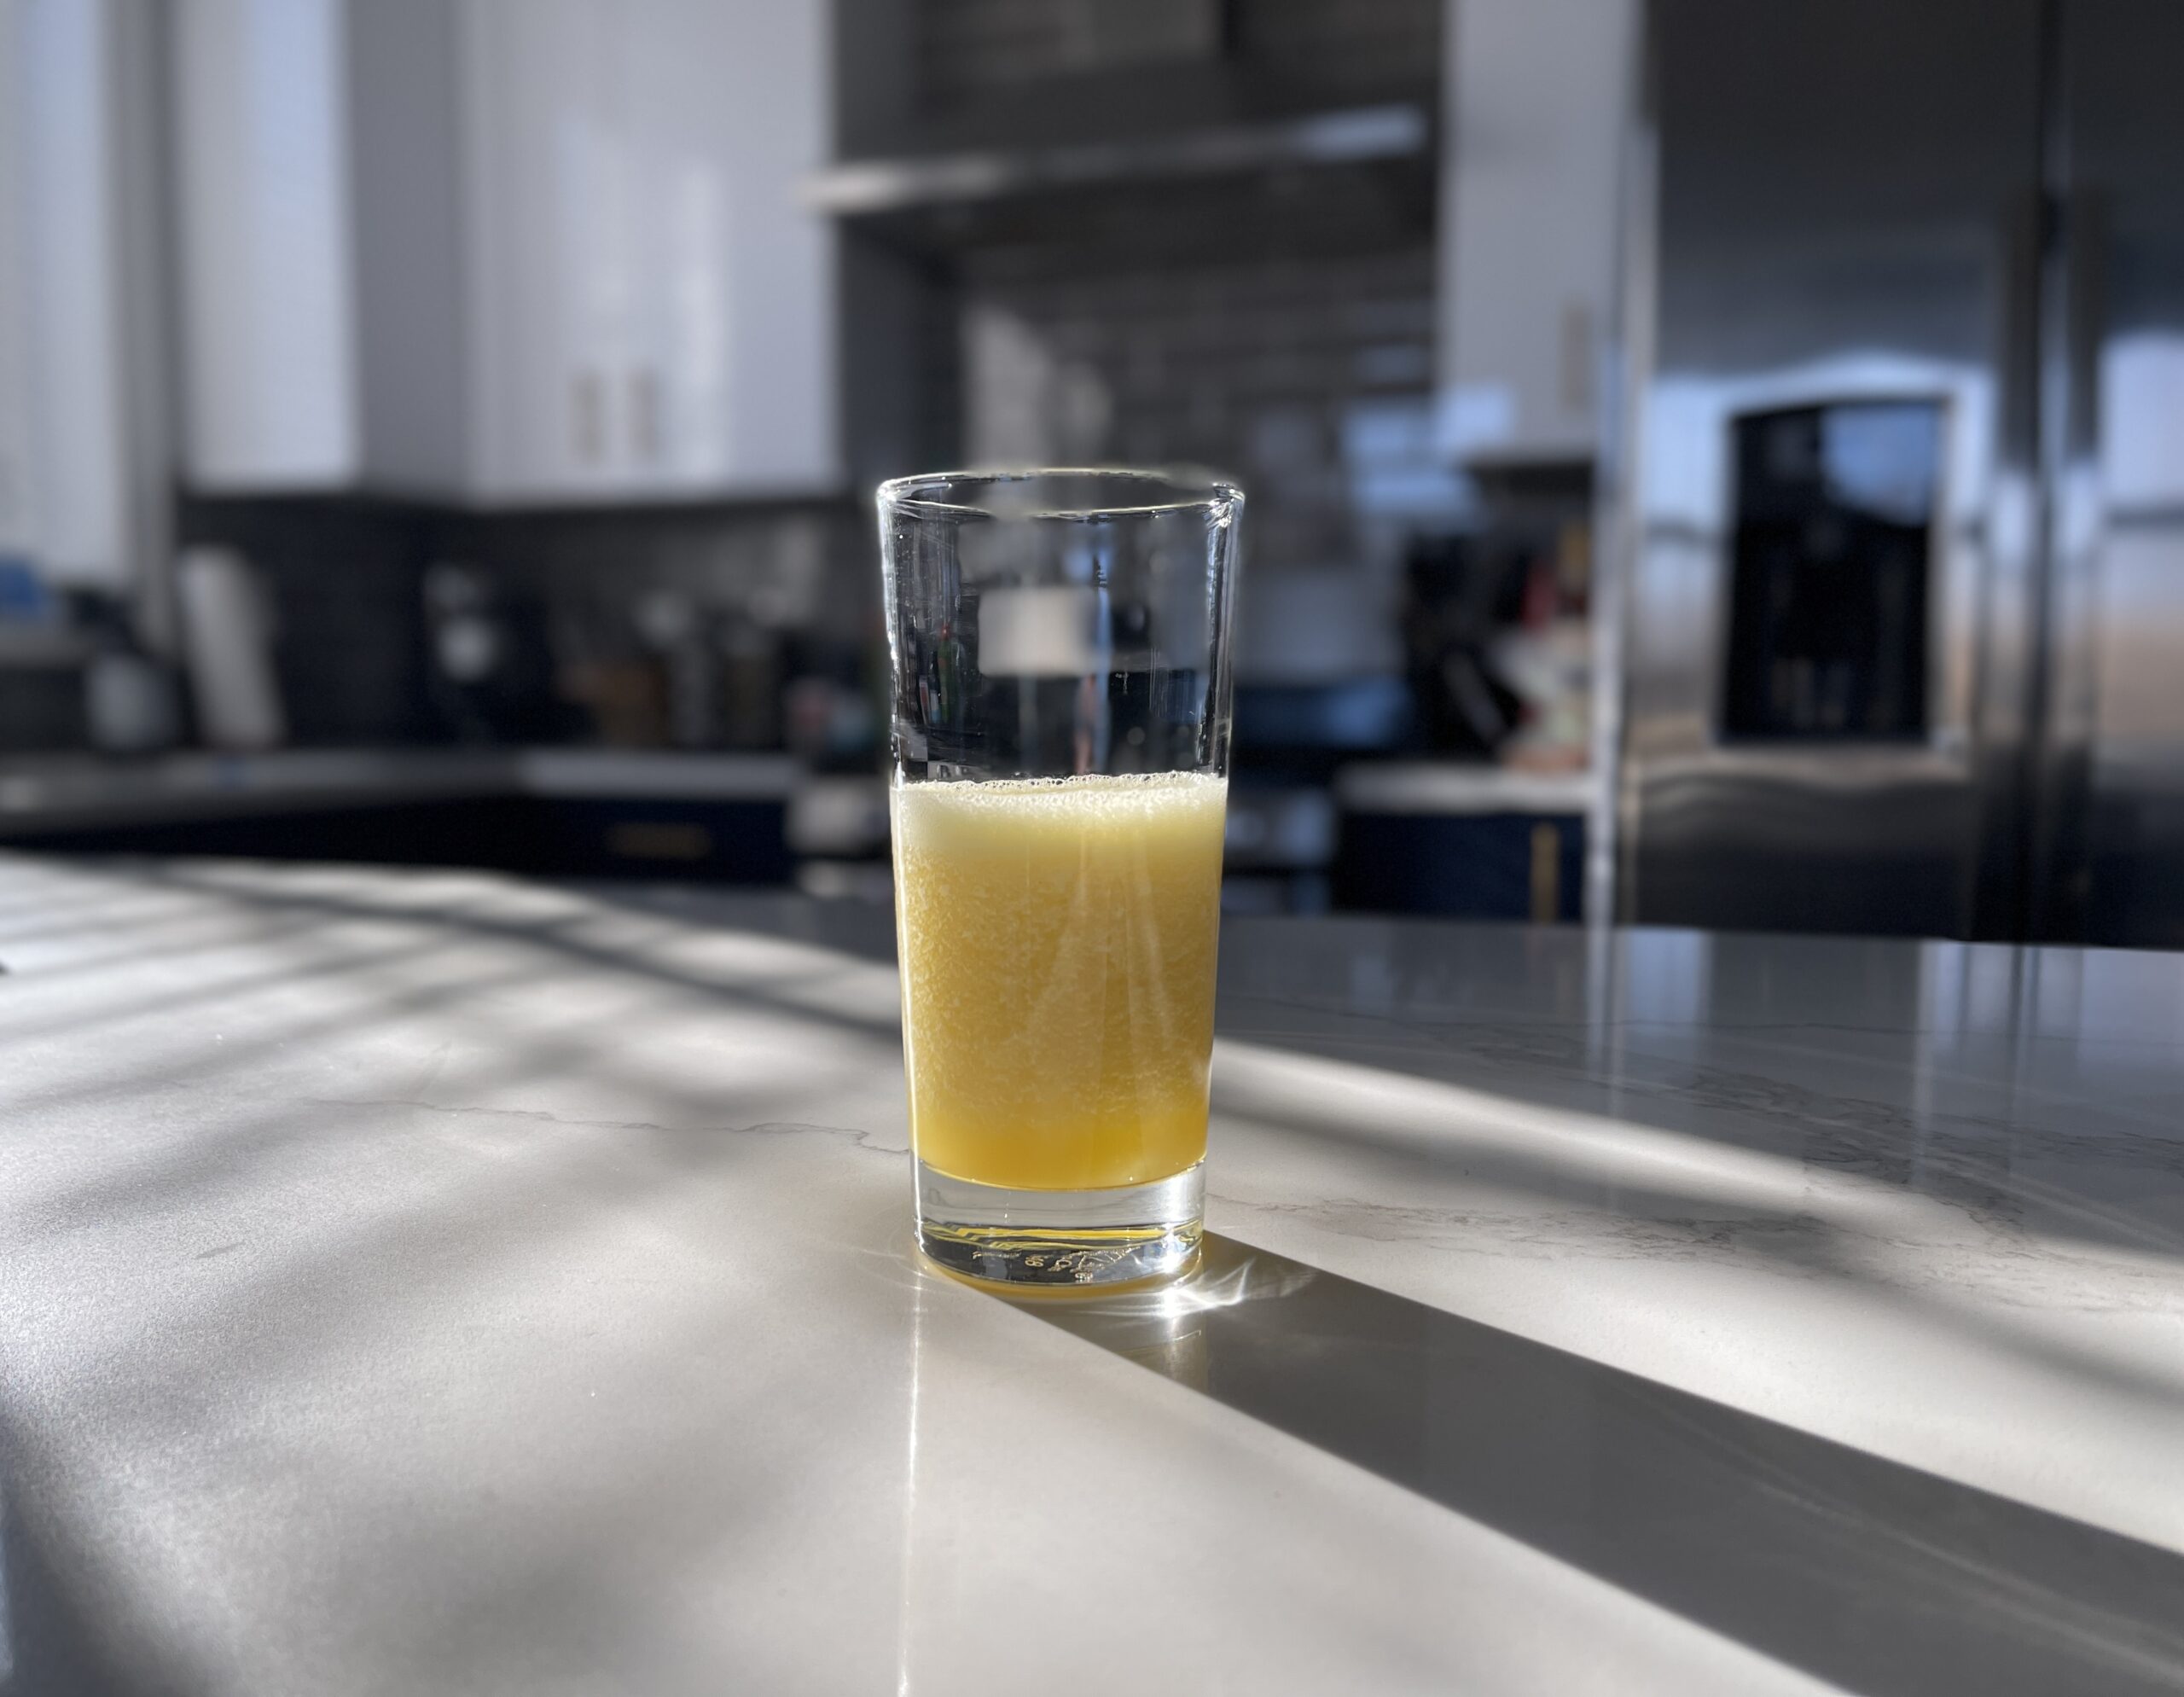 Perception: Is this Glass of Orange Juice half full or half empty?